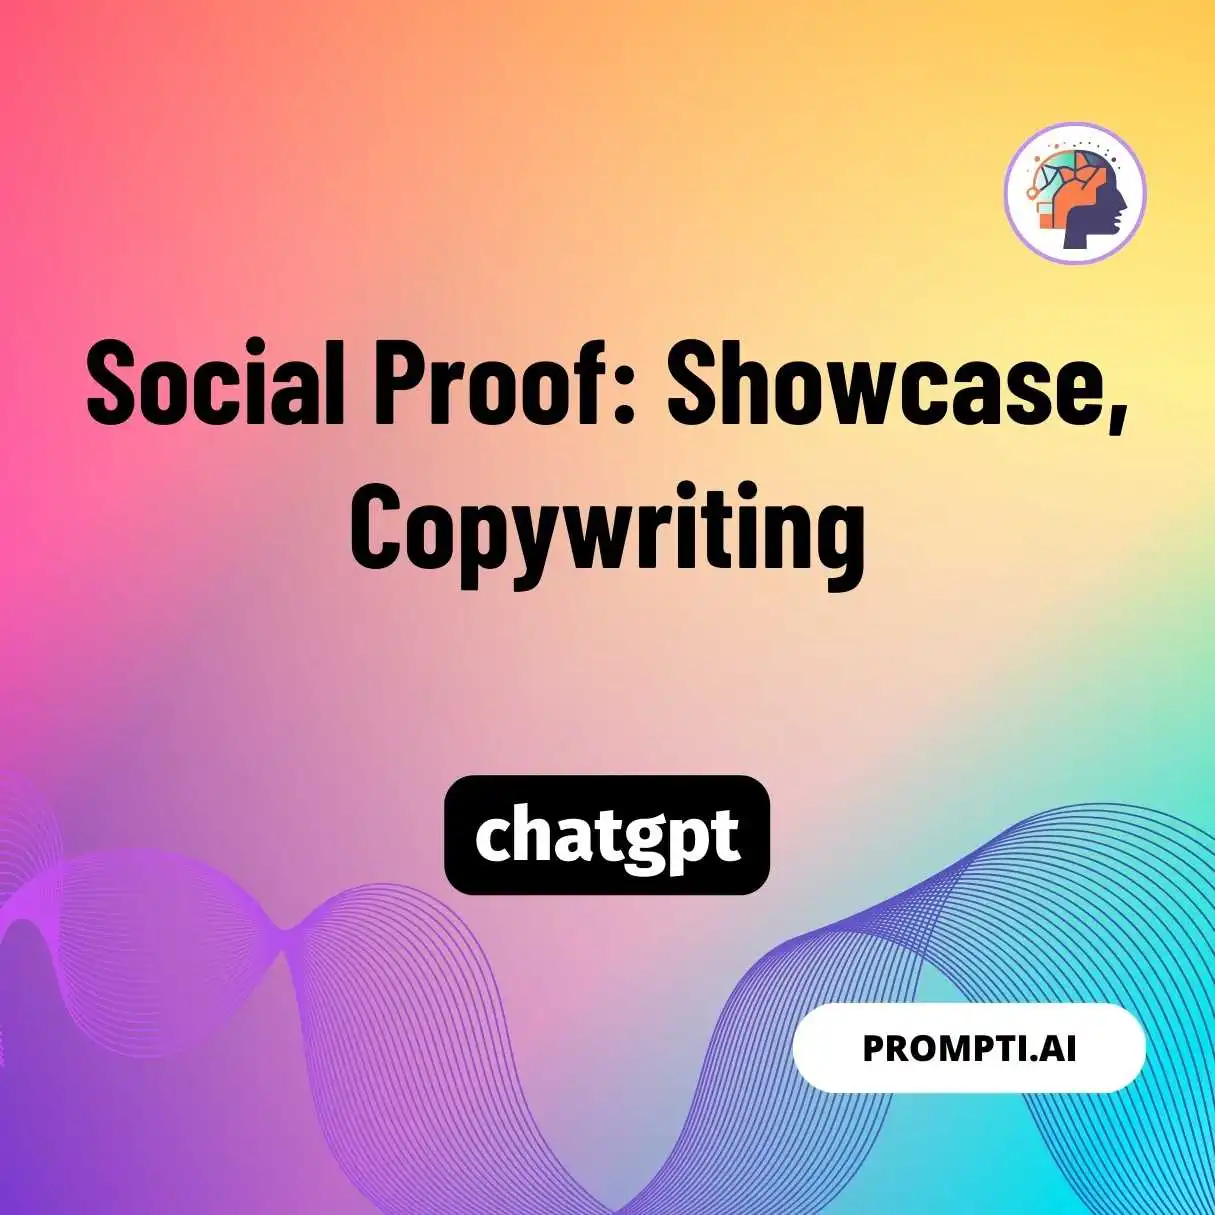 Social Proof: Showcase, Copywriting